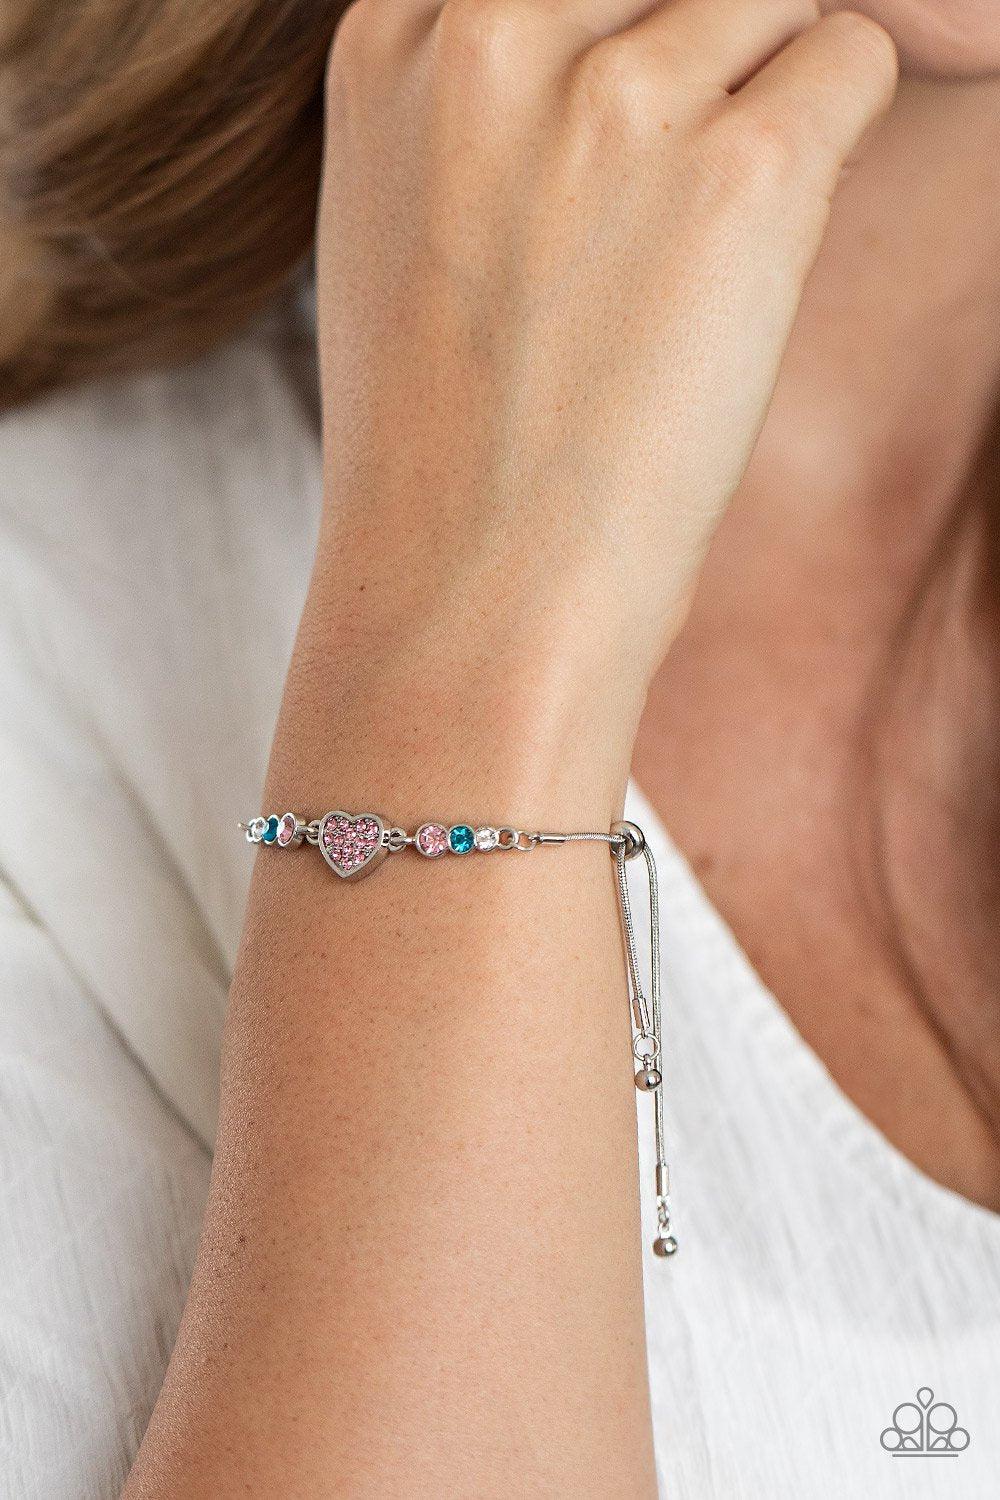 Big-Hearted Beam Multi Blue and Pink Rhinestone Heart Slide Bracelet - Paparazzi Accessories - model -CarasShop.com - $5 Jewelry by Cara Jewels